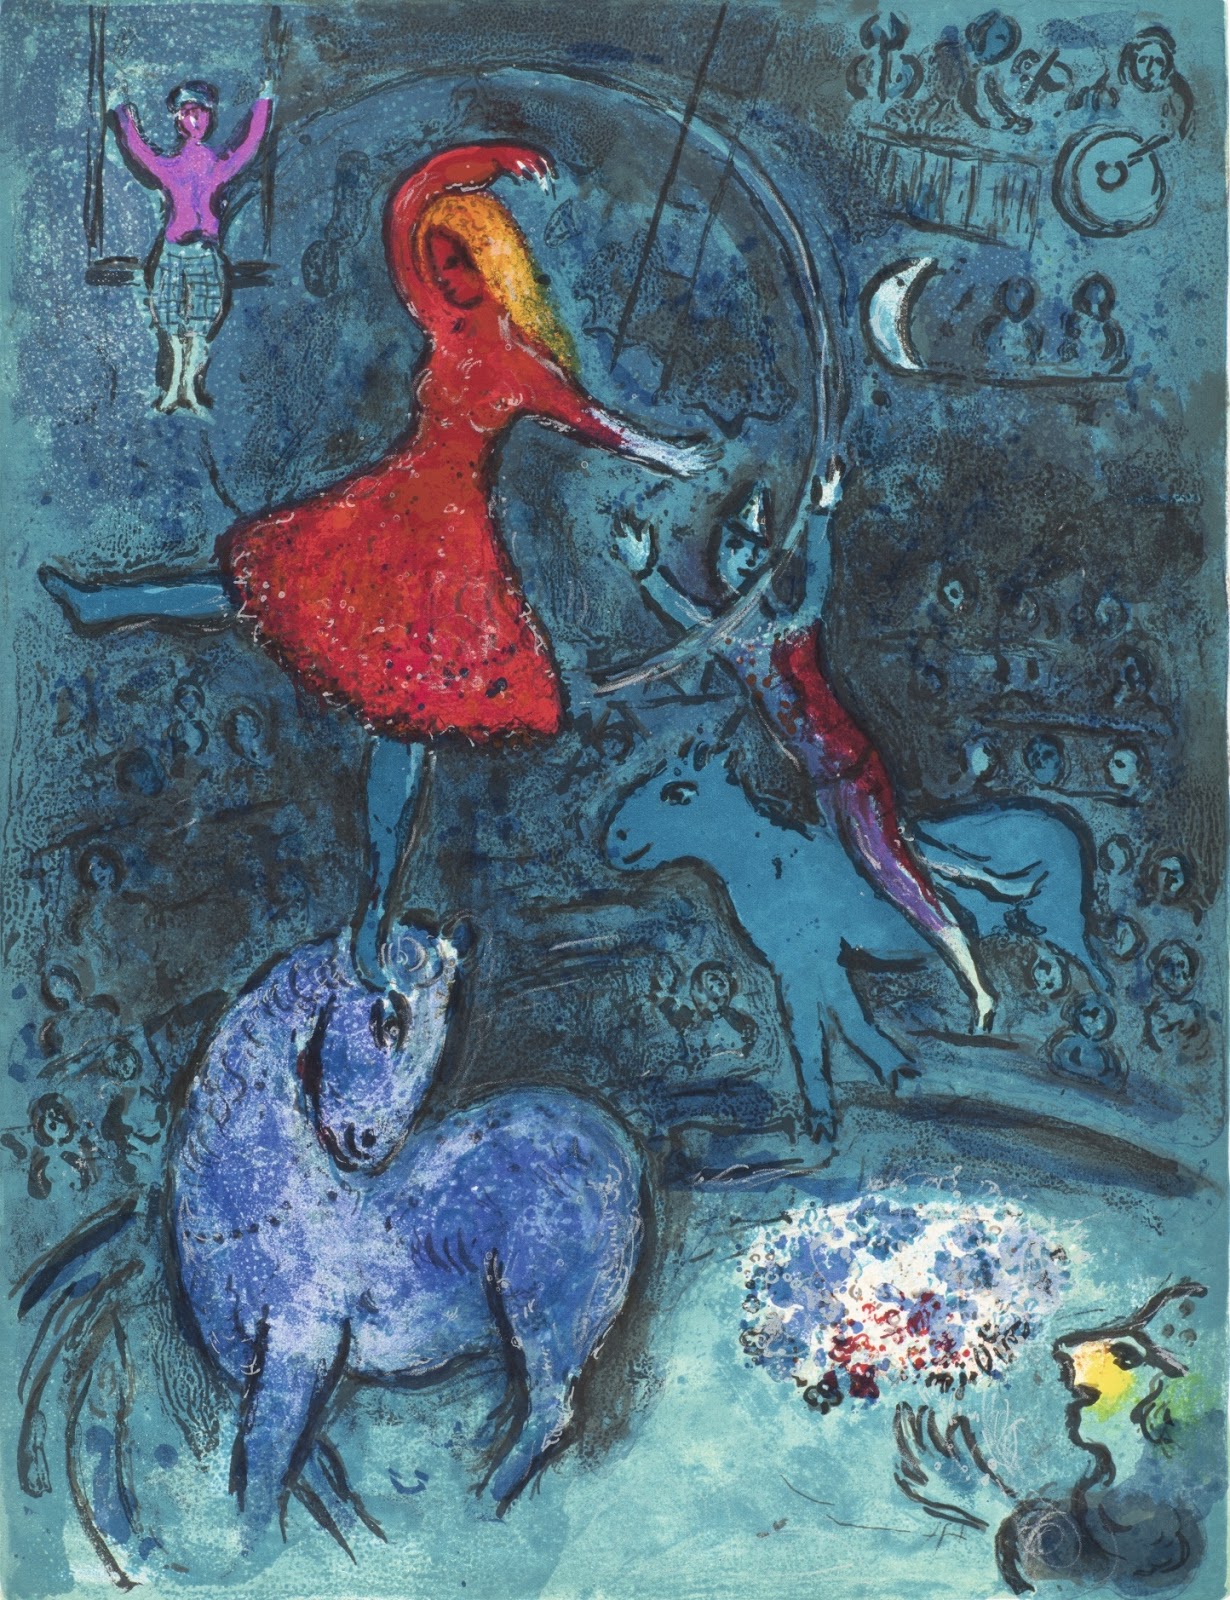 Marc+Chagall-1887-1985 (46).jpg